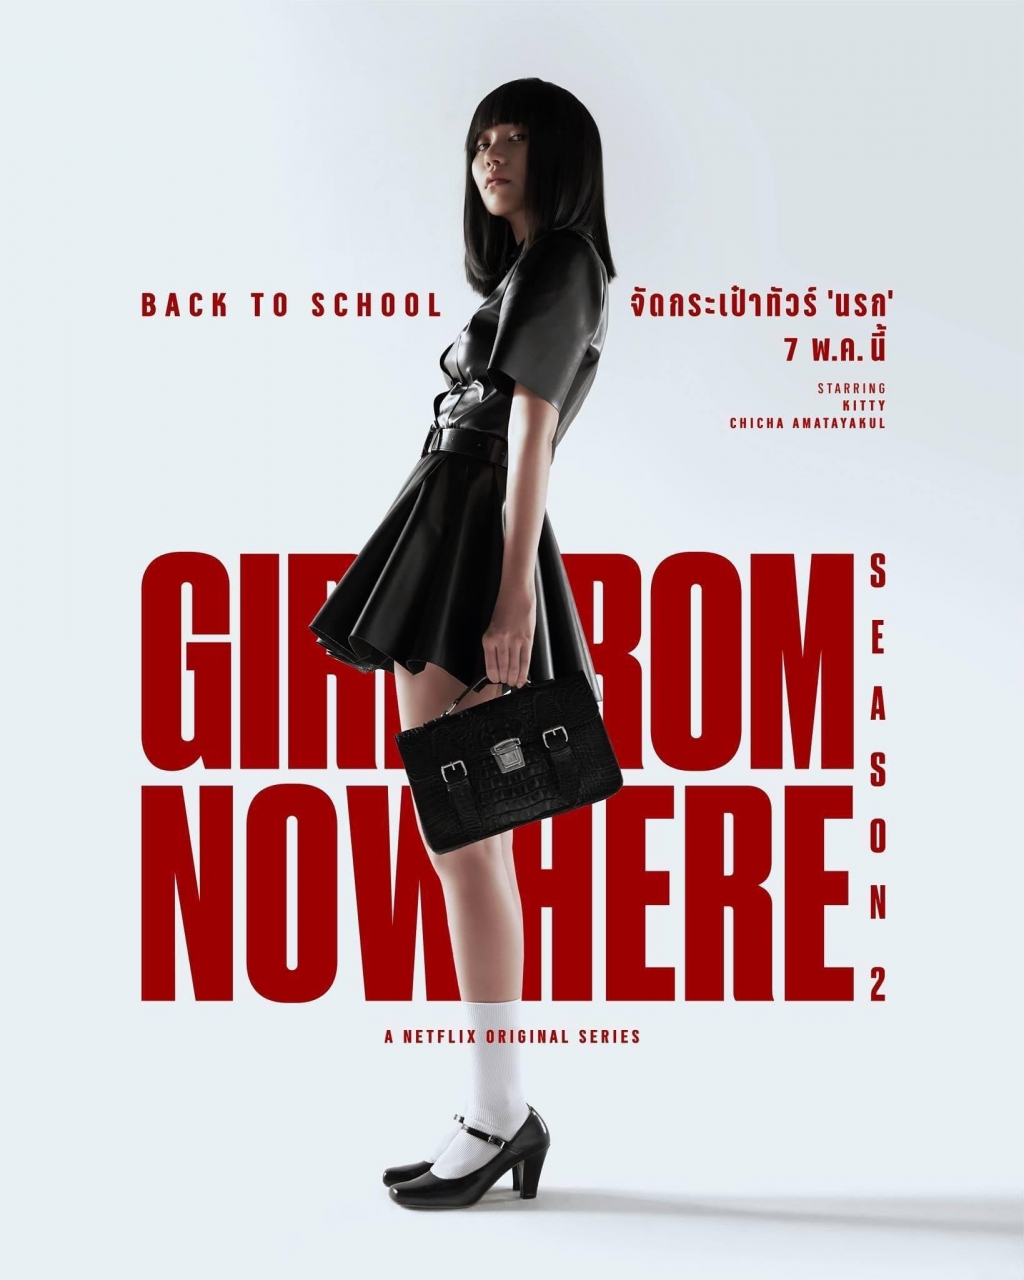 Tại sao "Girl from nowhere 2" lại bị chê bai nhiều tới vậy?